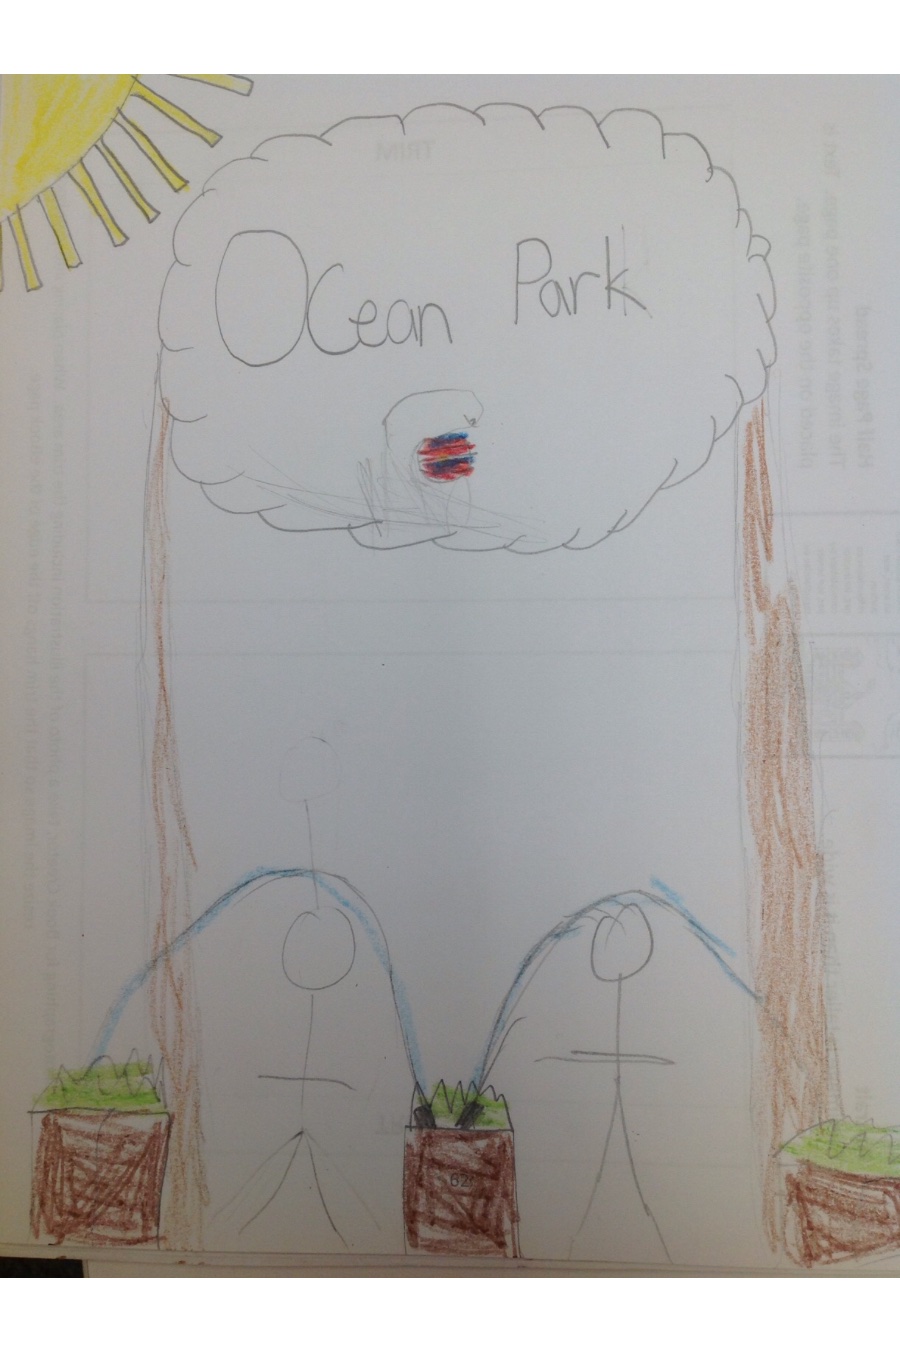 Ocean Park by Leo T